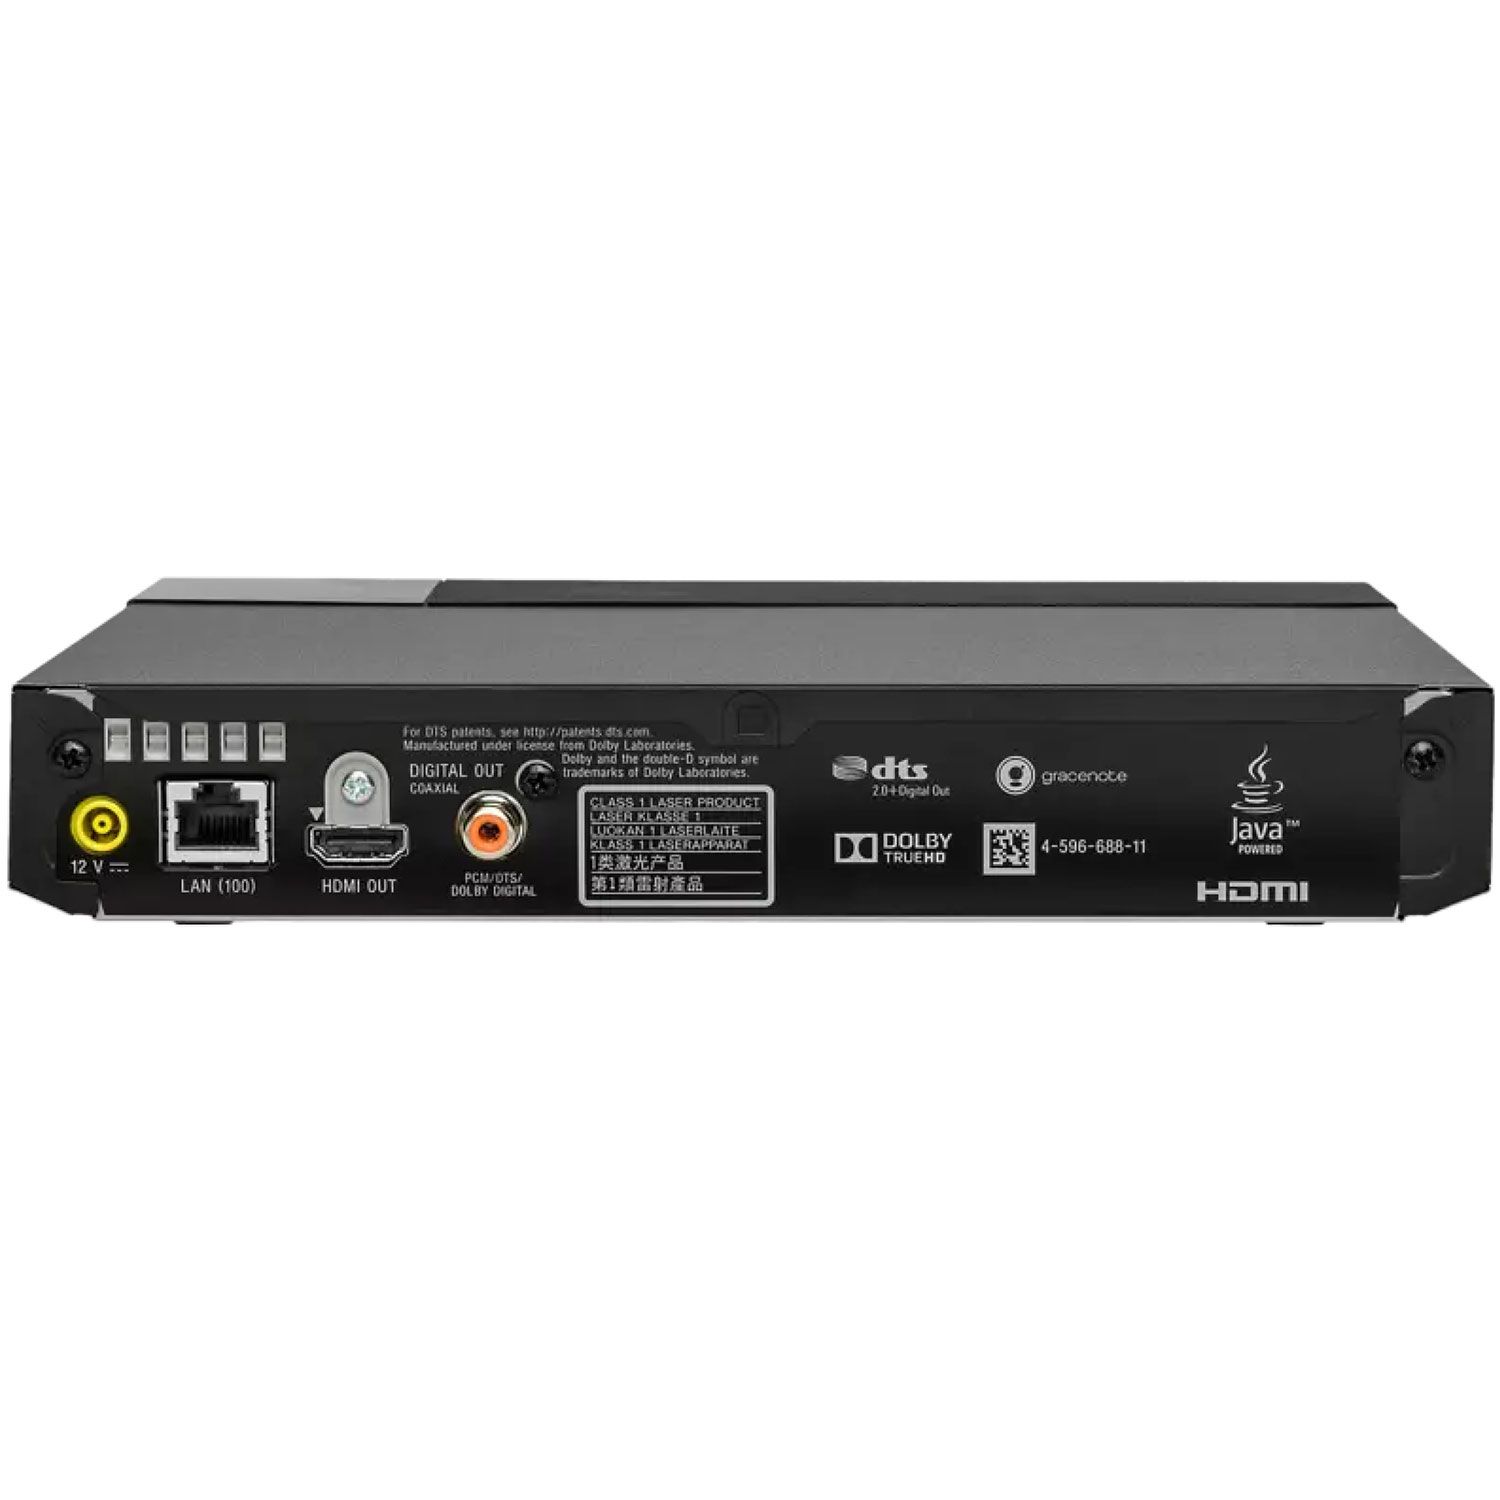 Sony BDPS3700B | Black Smart - Cornwall - Electrical Retailer & HBH Local Woolacotts Blu-ray Player Devon\'s